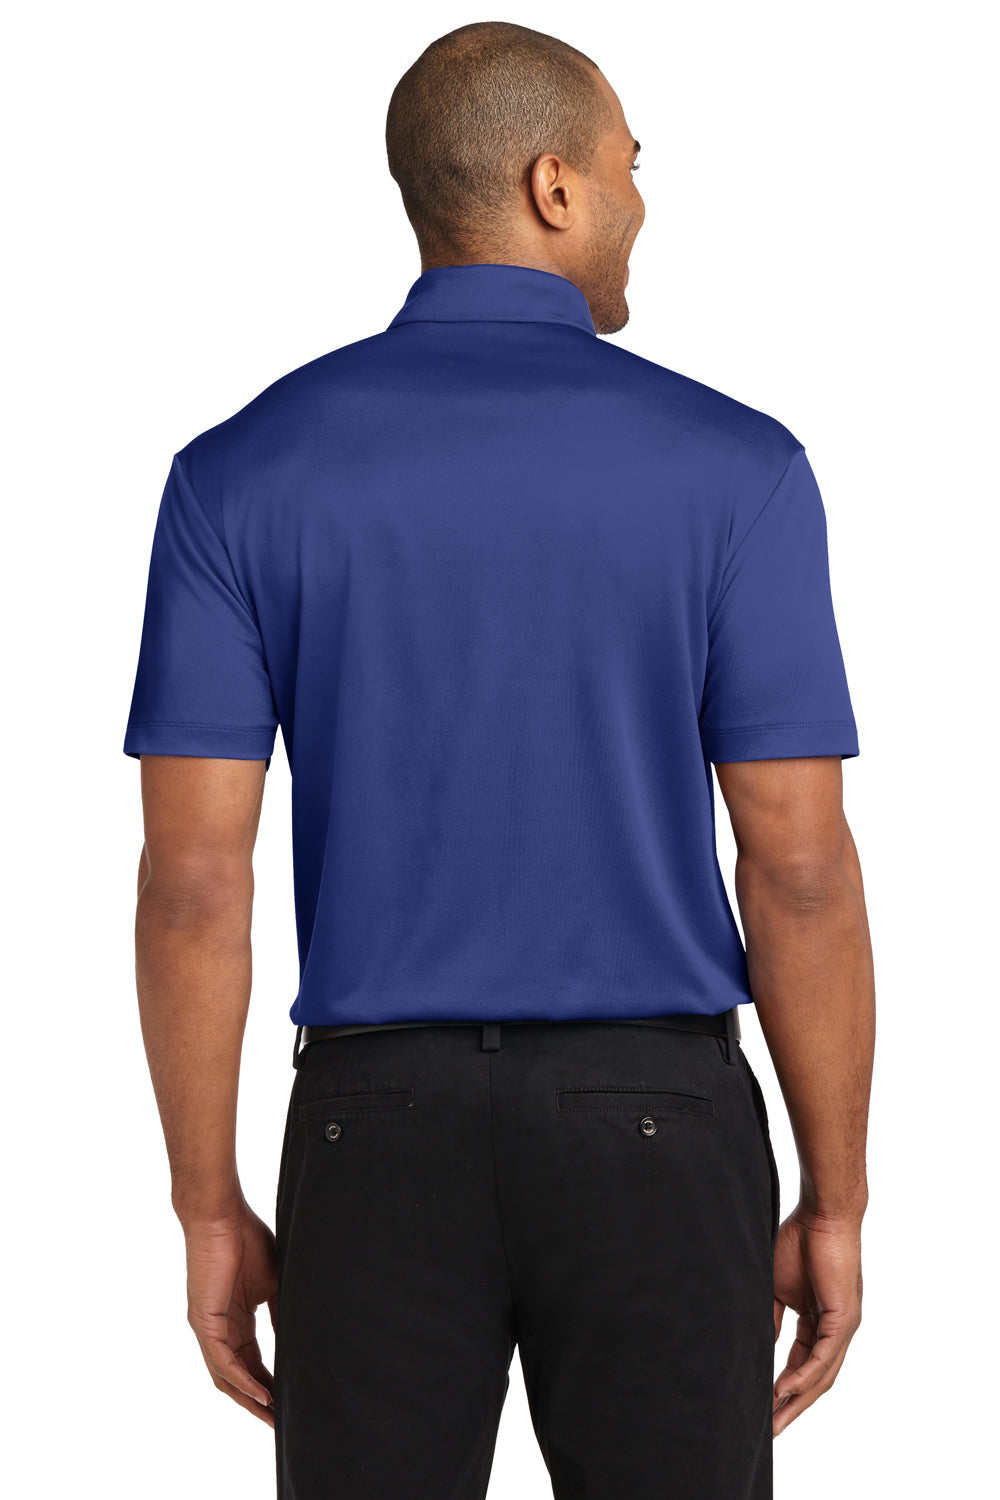 Port Authority K540P Mens Silk Touch Performance Moisture Wicking Short Sleeve Polo Shirt w/ Pocket Royal Blue Back